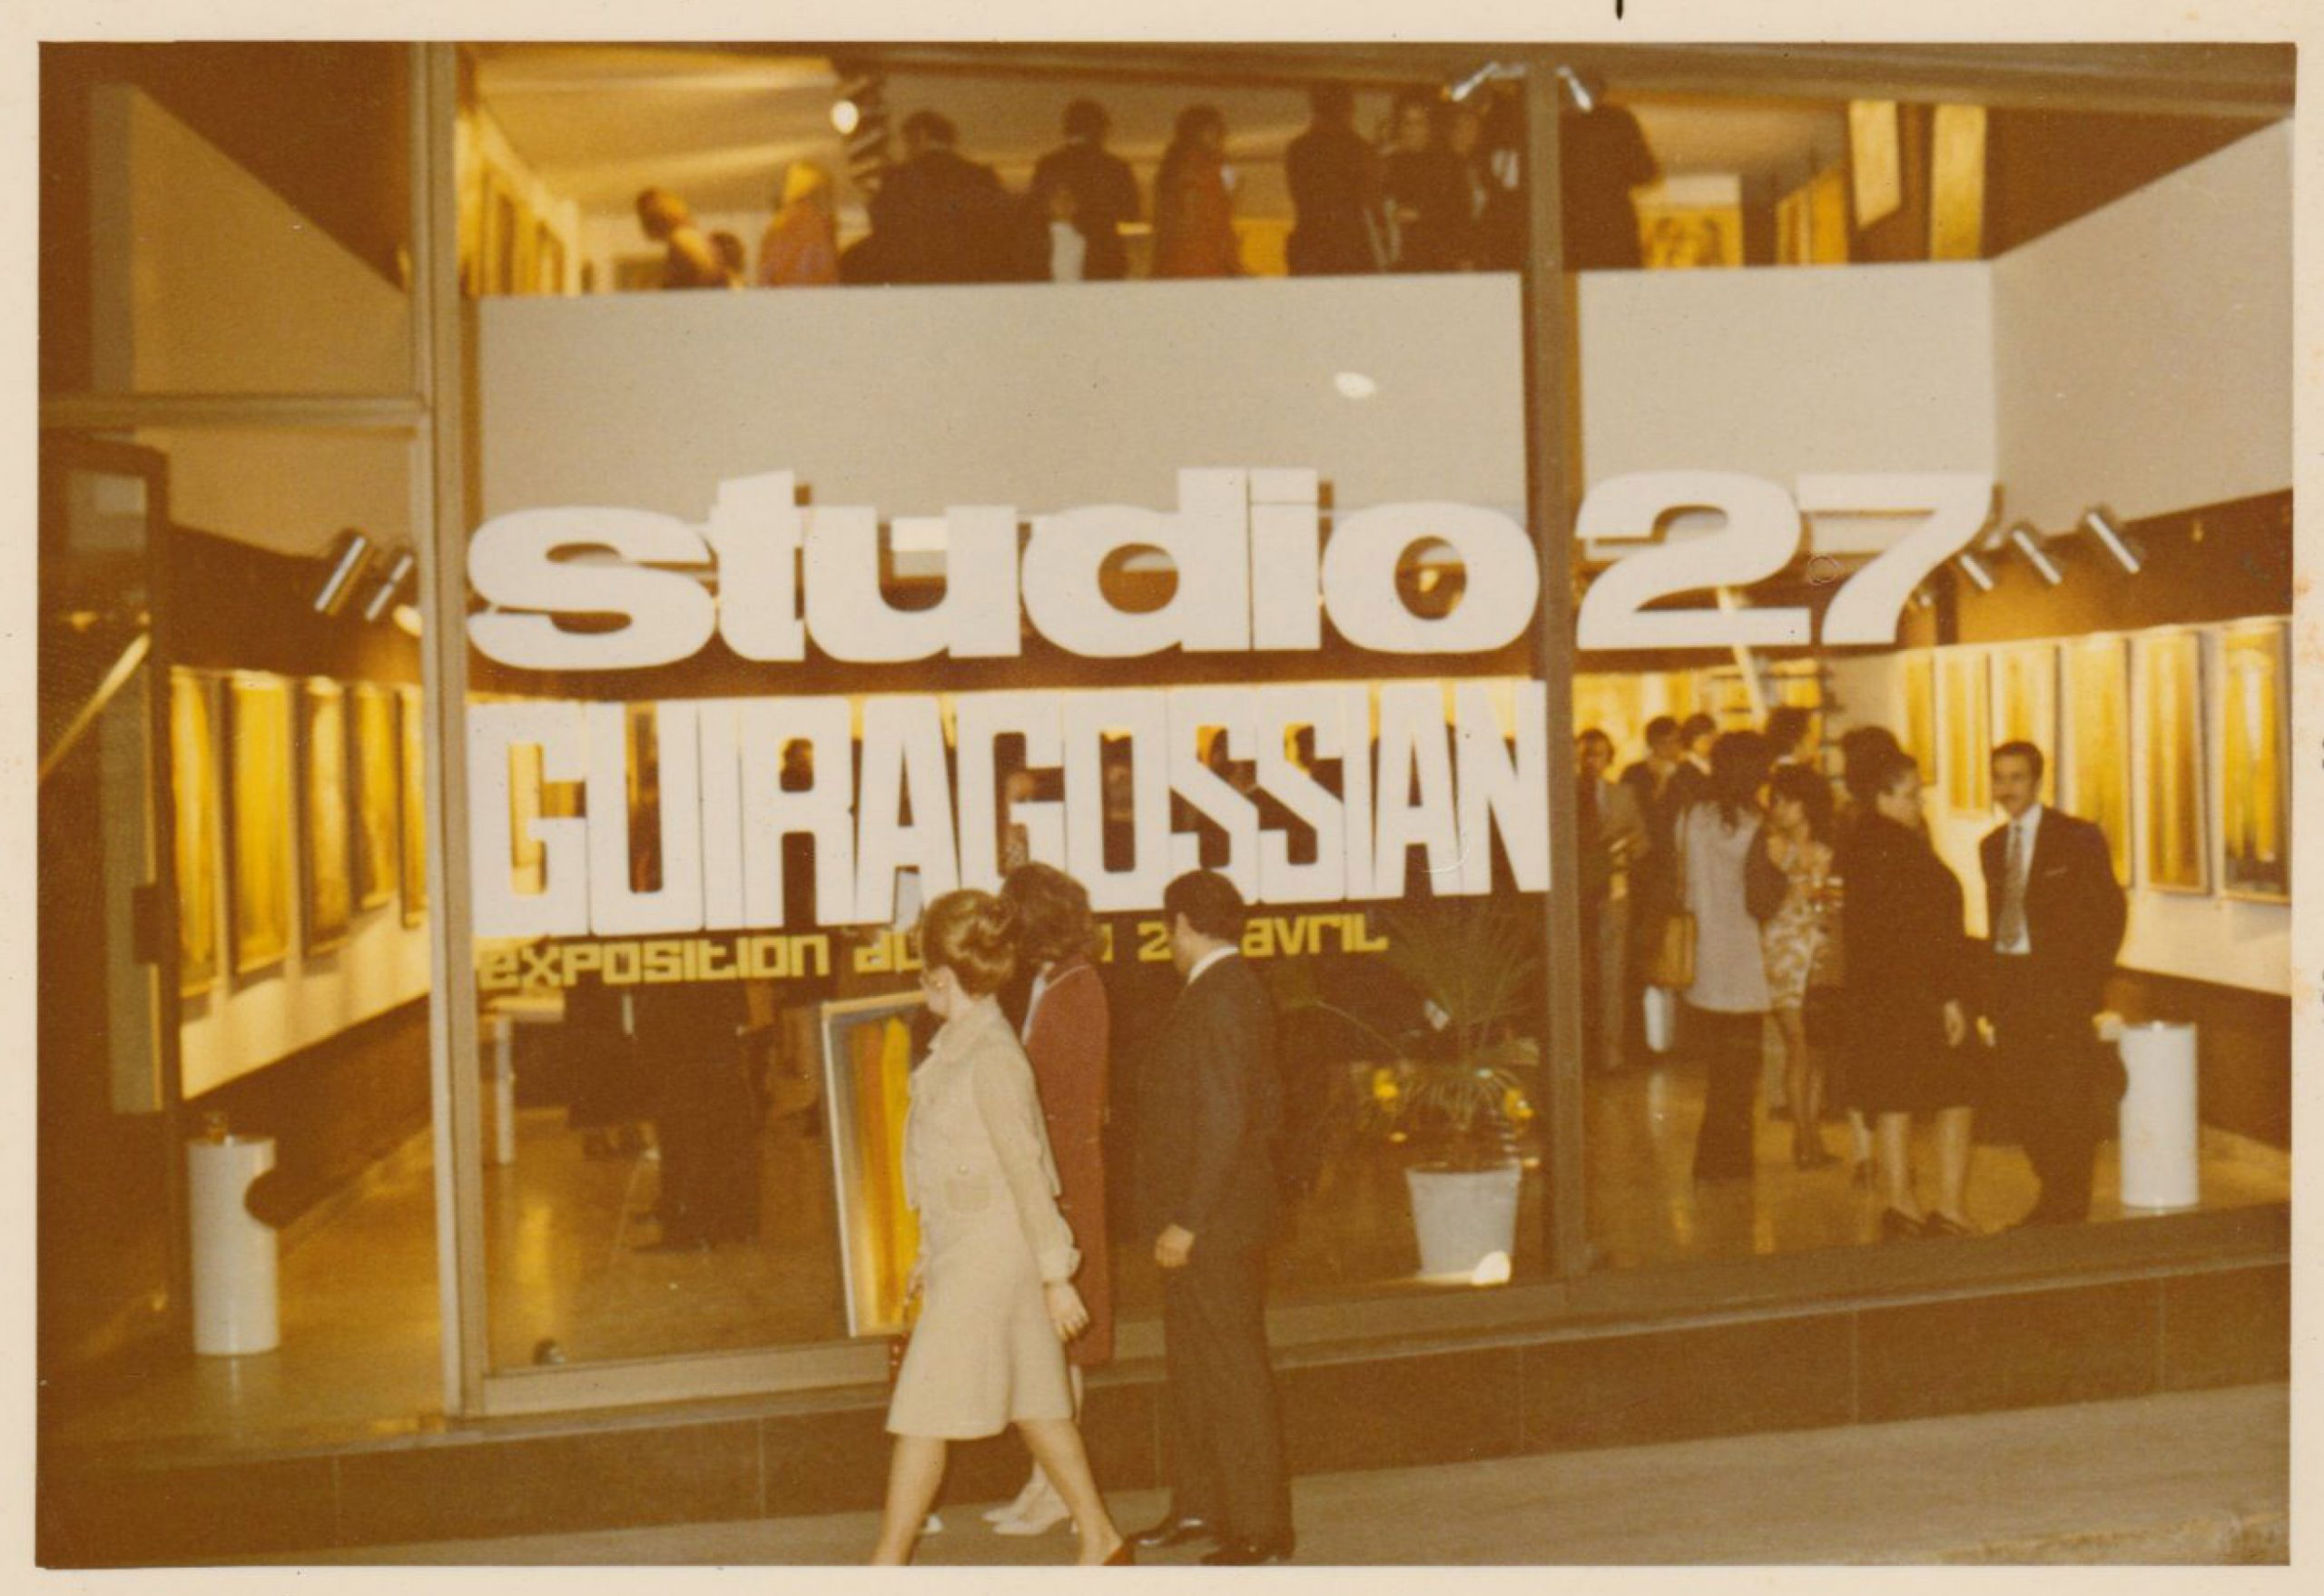 Photograph of Paul Guiragossian Exhibition at Studio 27, 1970. Courtesy Paul Guiragossian Archives